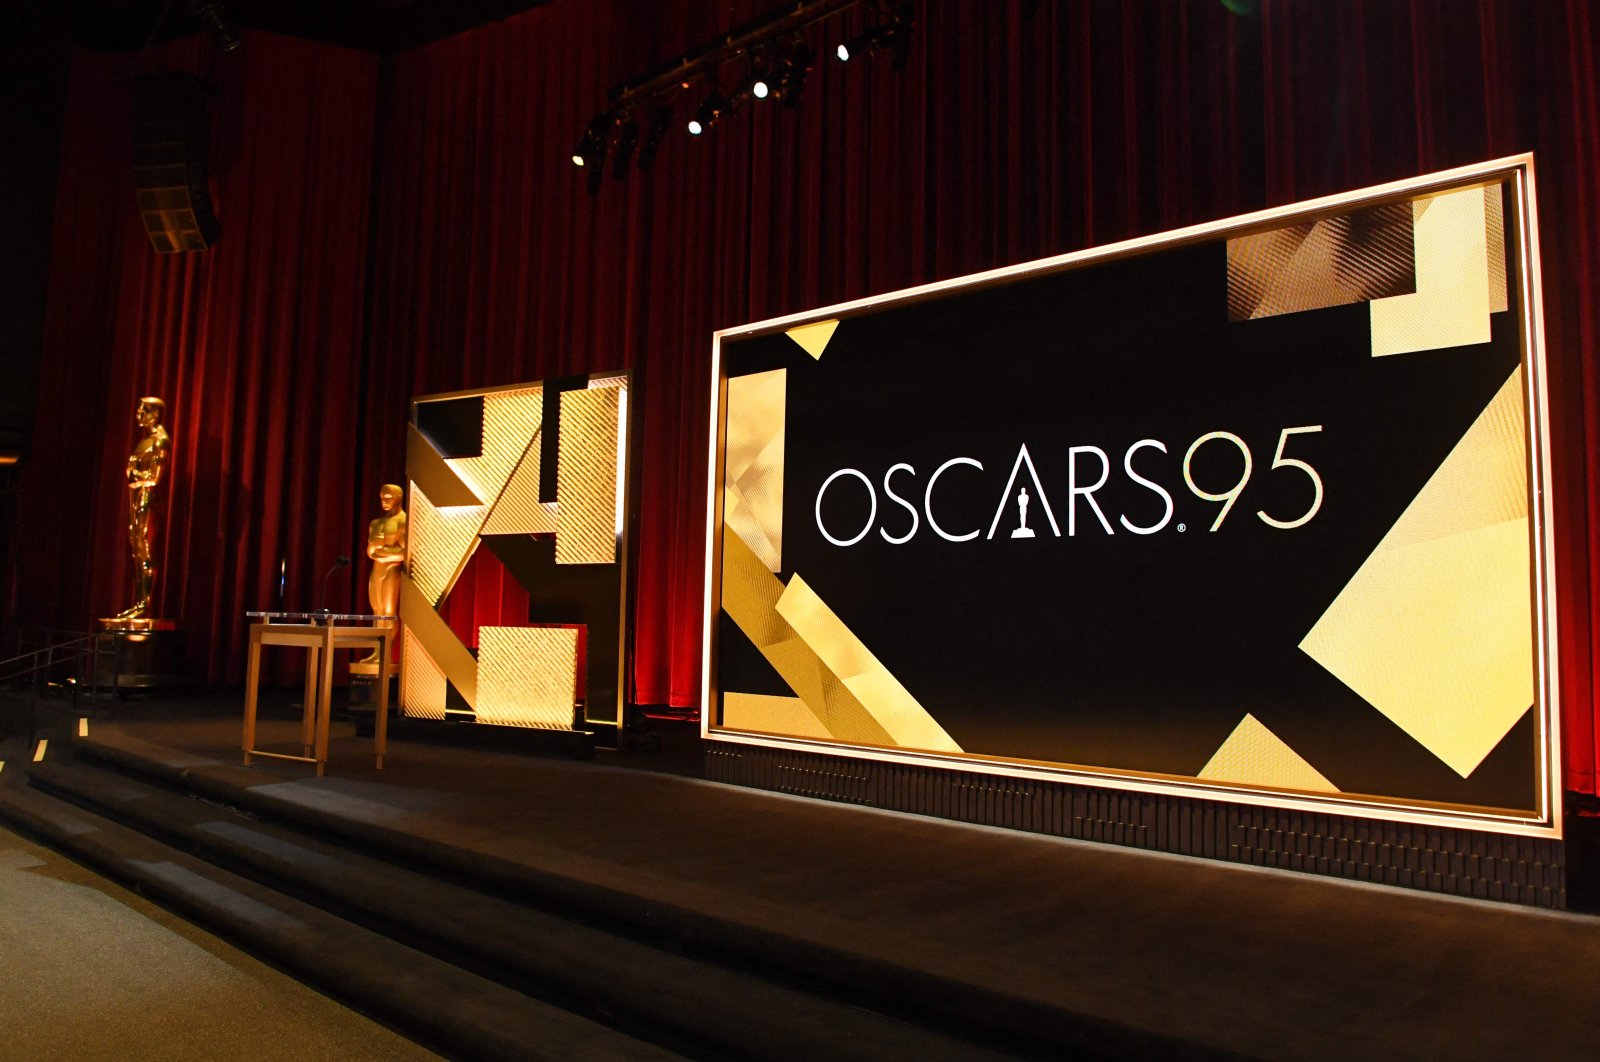 Terjadi: Nominasi Oscar 2023 diumumkan